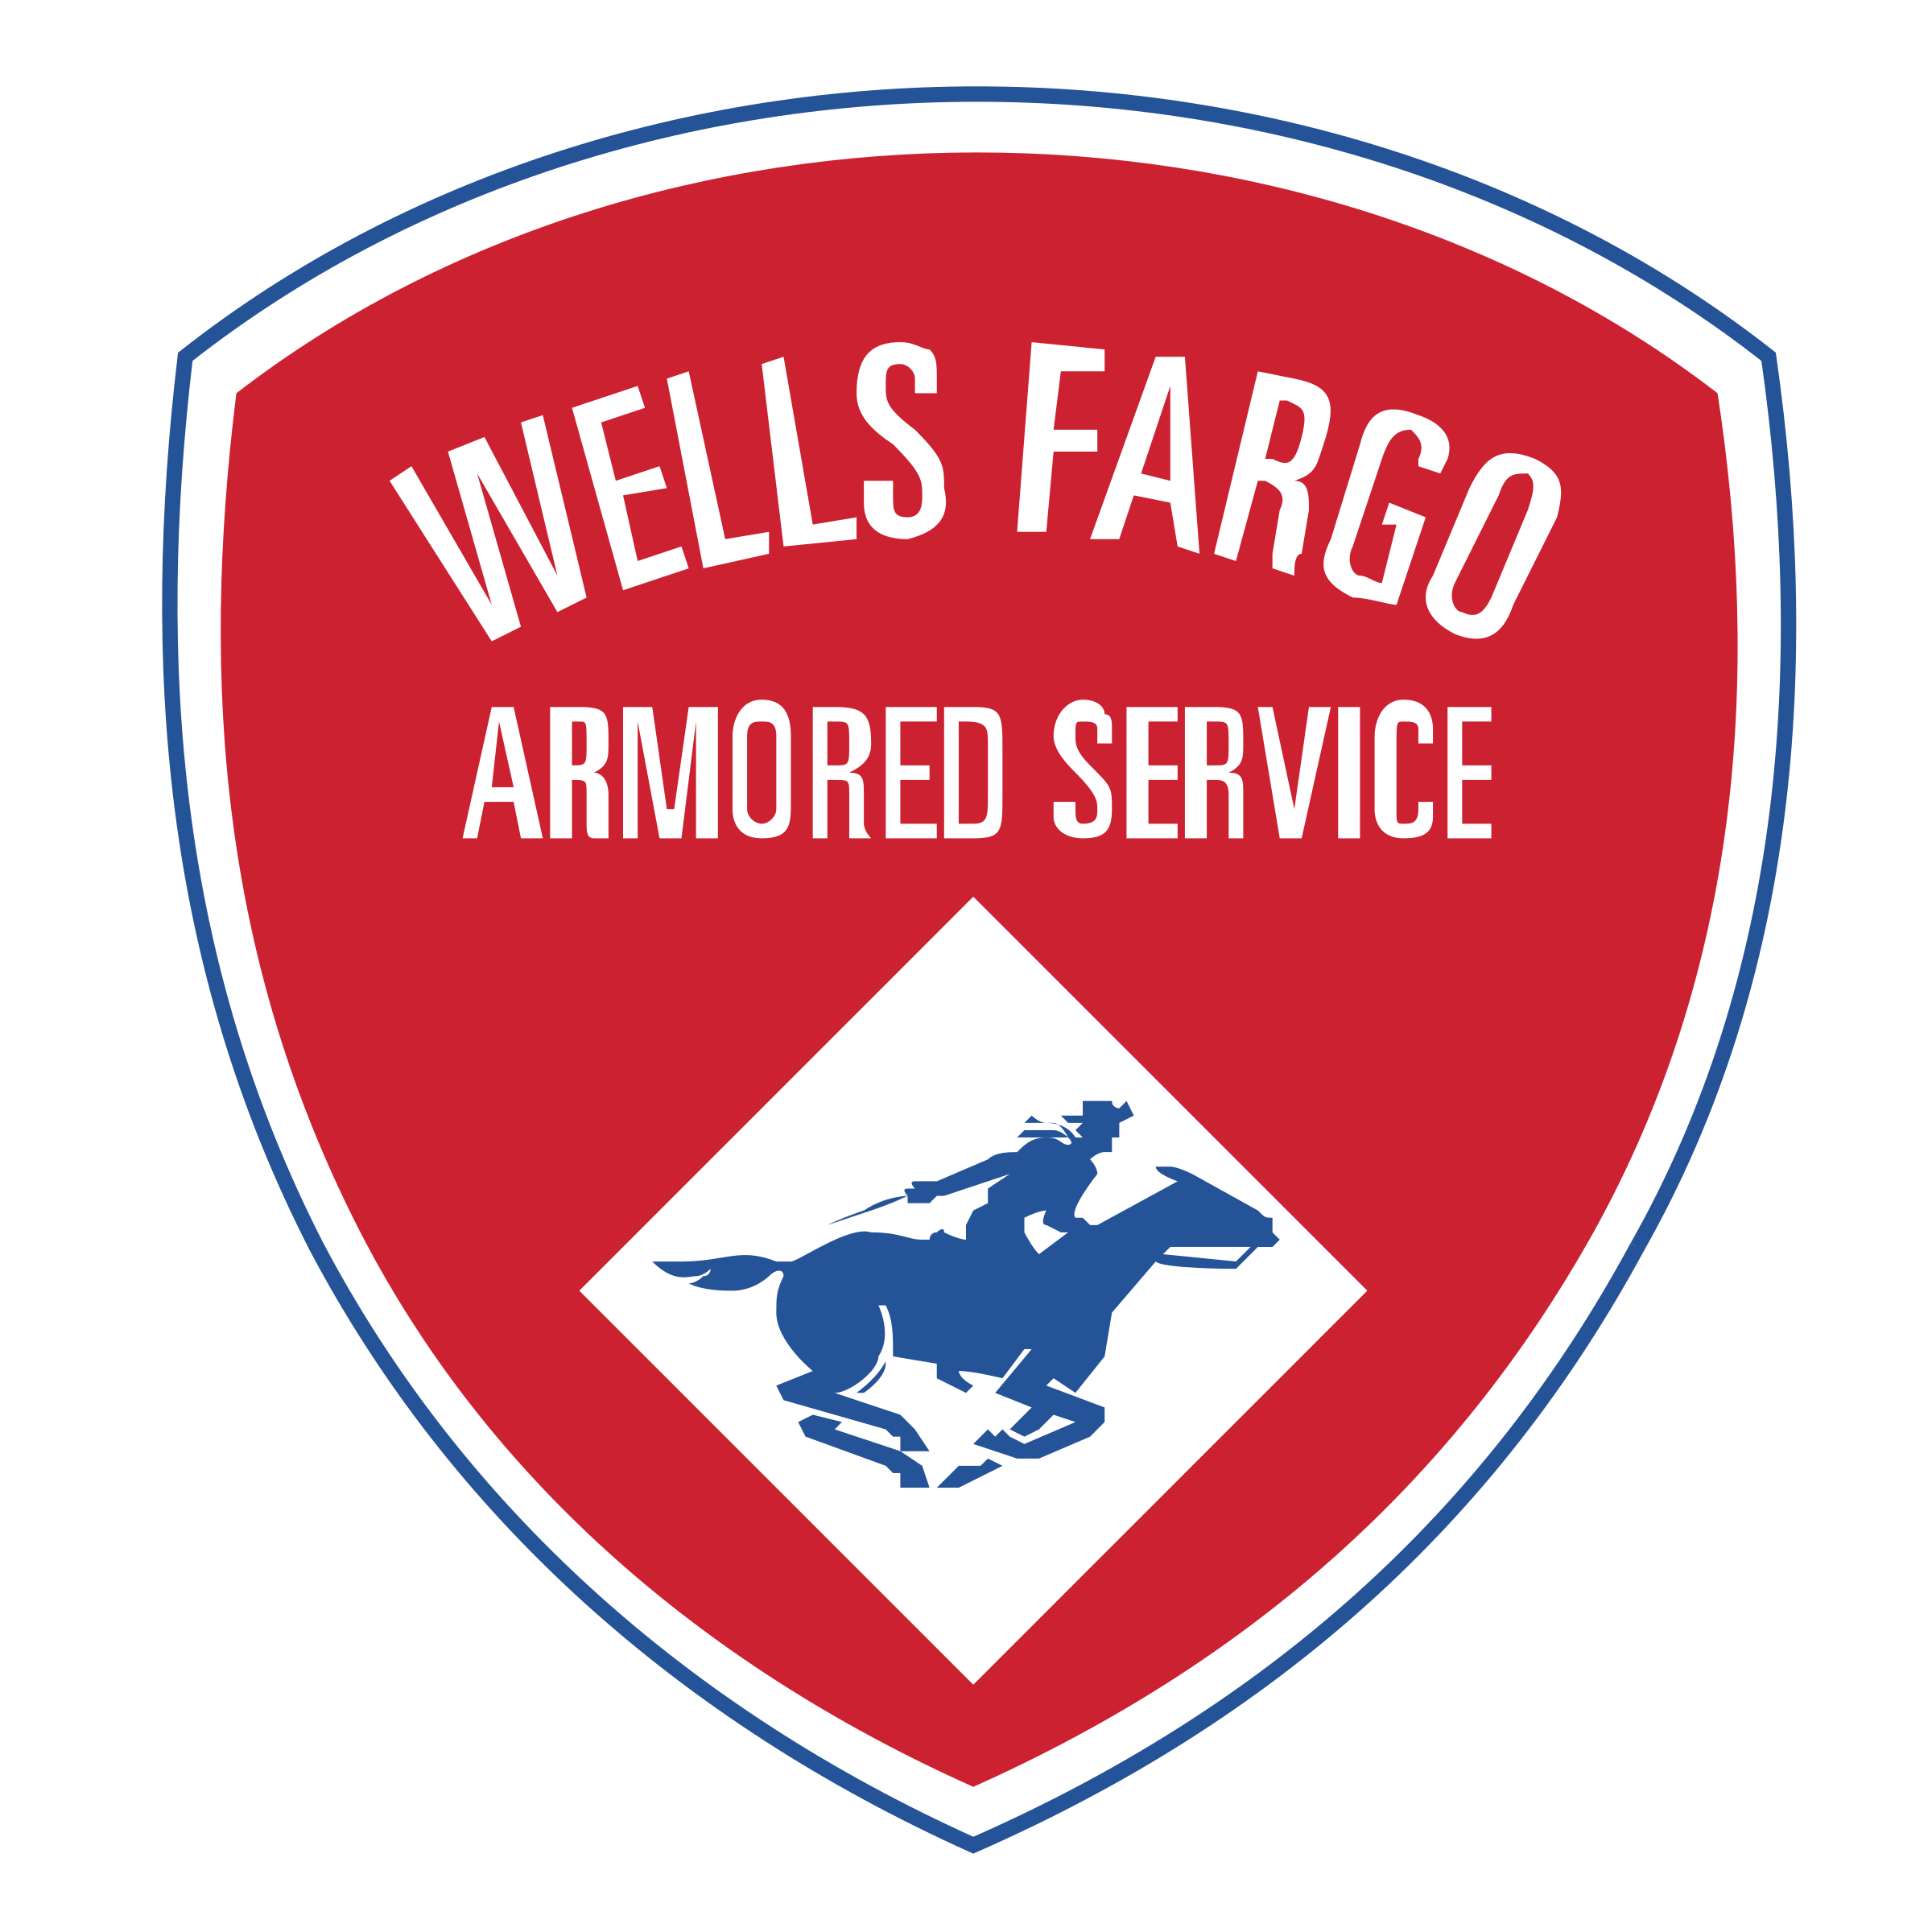 Wells Logo - Wells Fargo Armored Service Logo SVG Vector & PNG Transparent ...